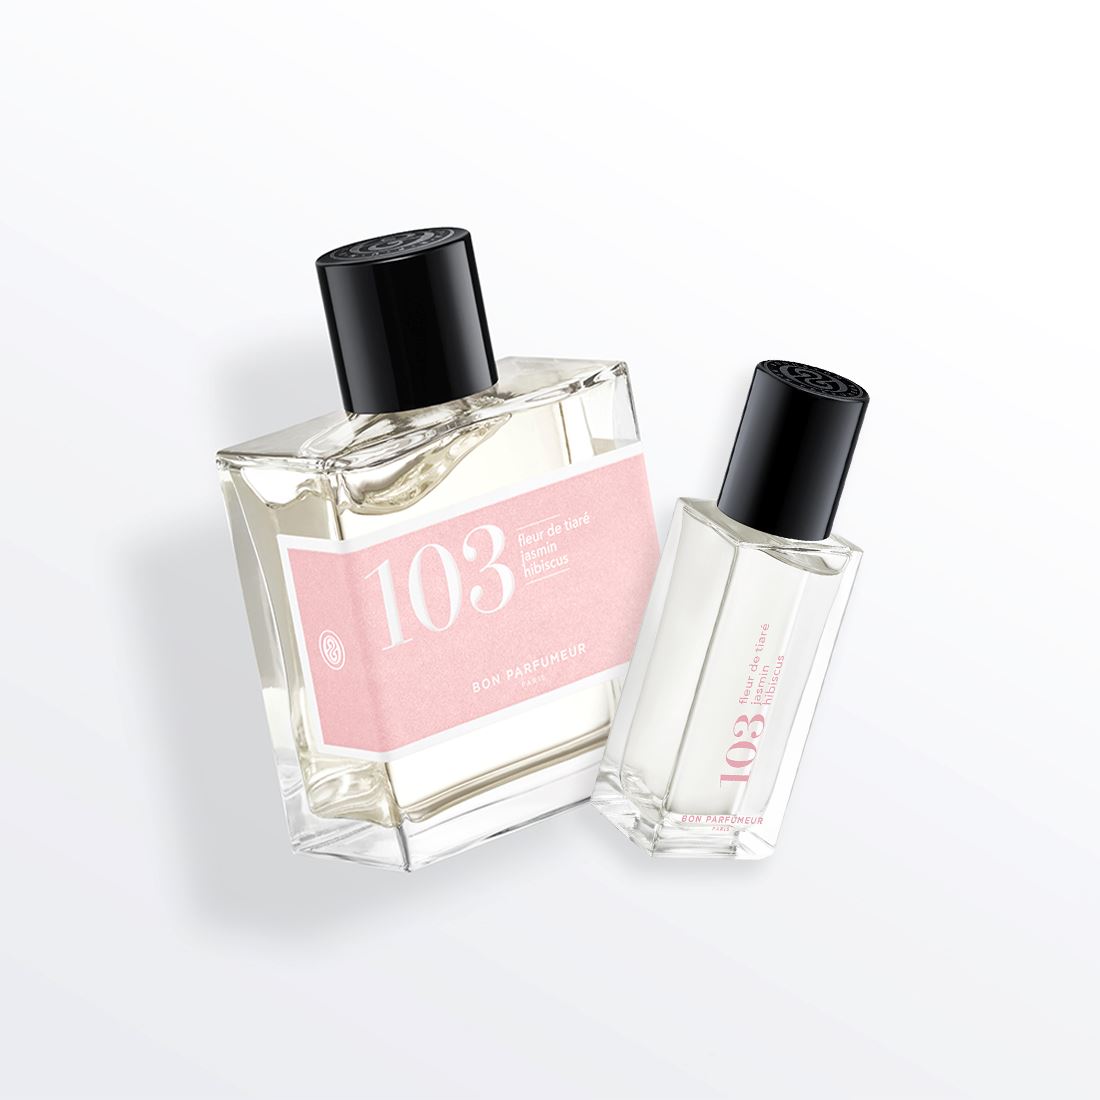 Bon Parfumeur - 103